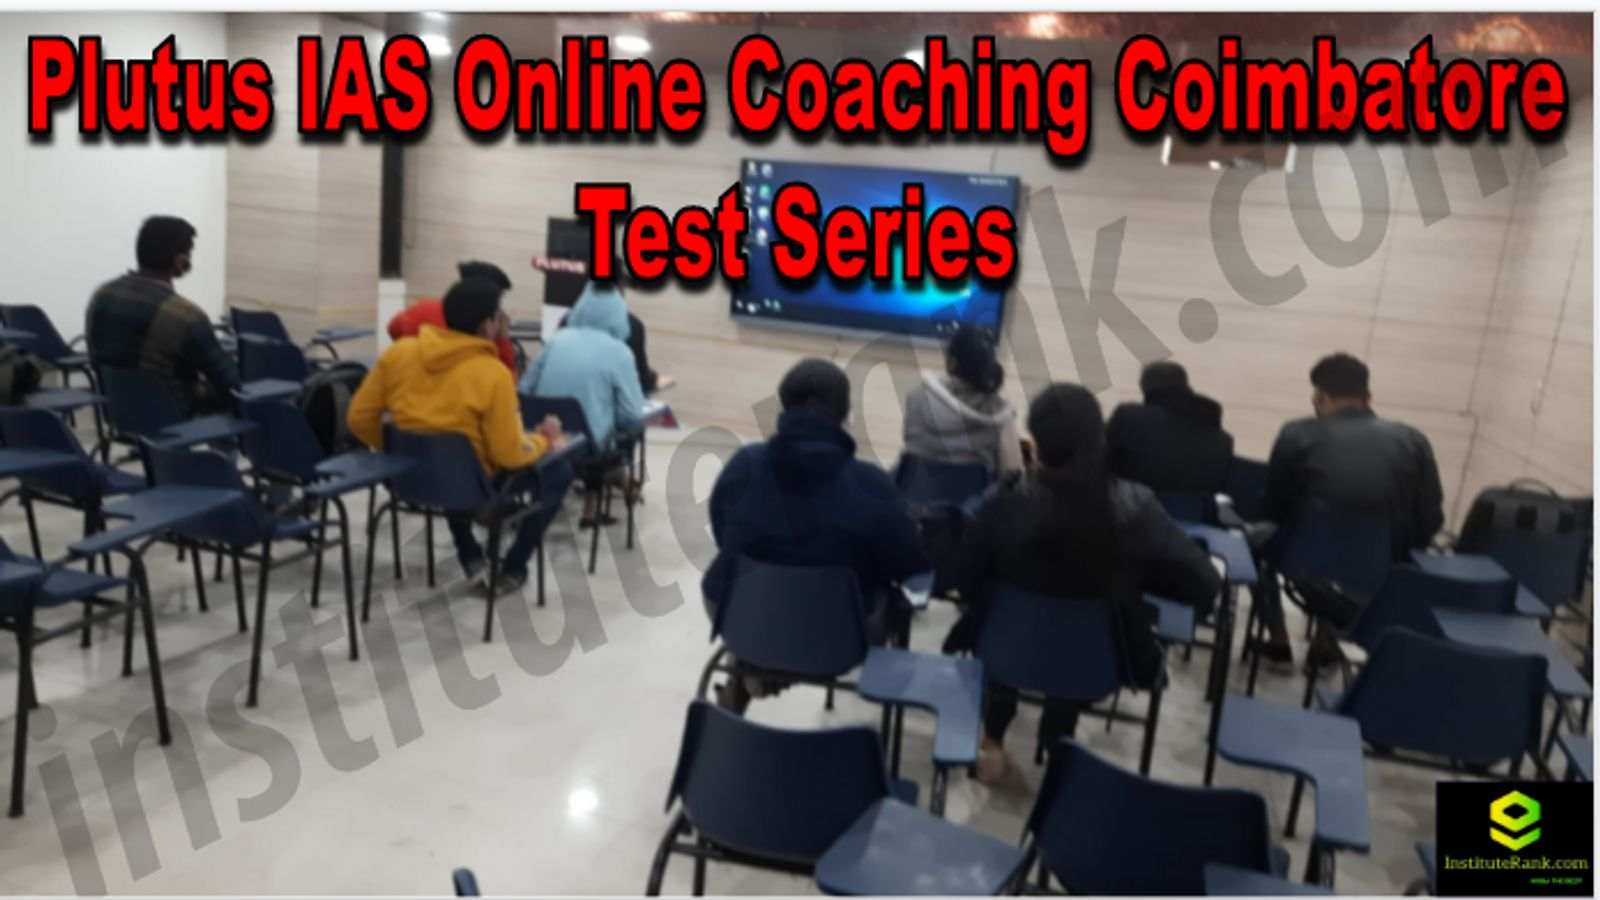 Plutus IAS Online Coaching Coimbatore Reviews Test Series